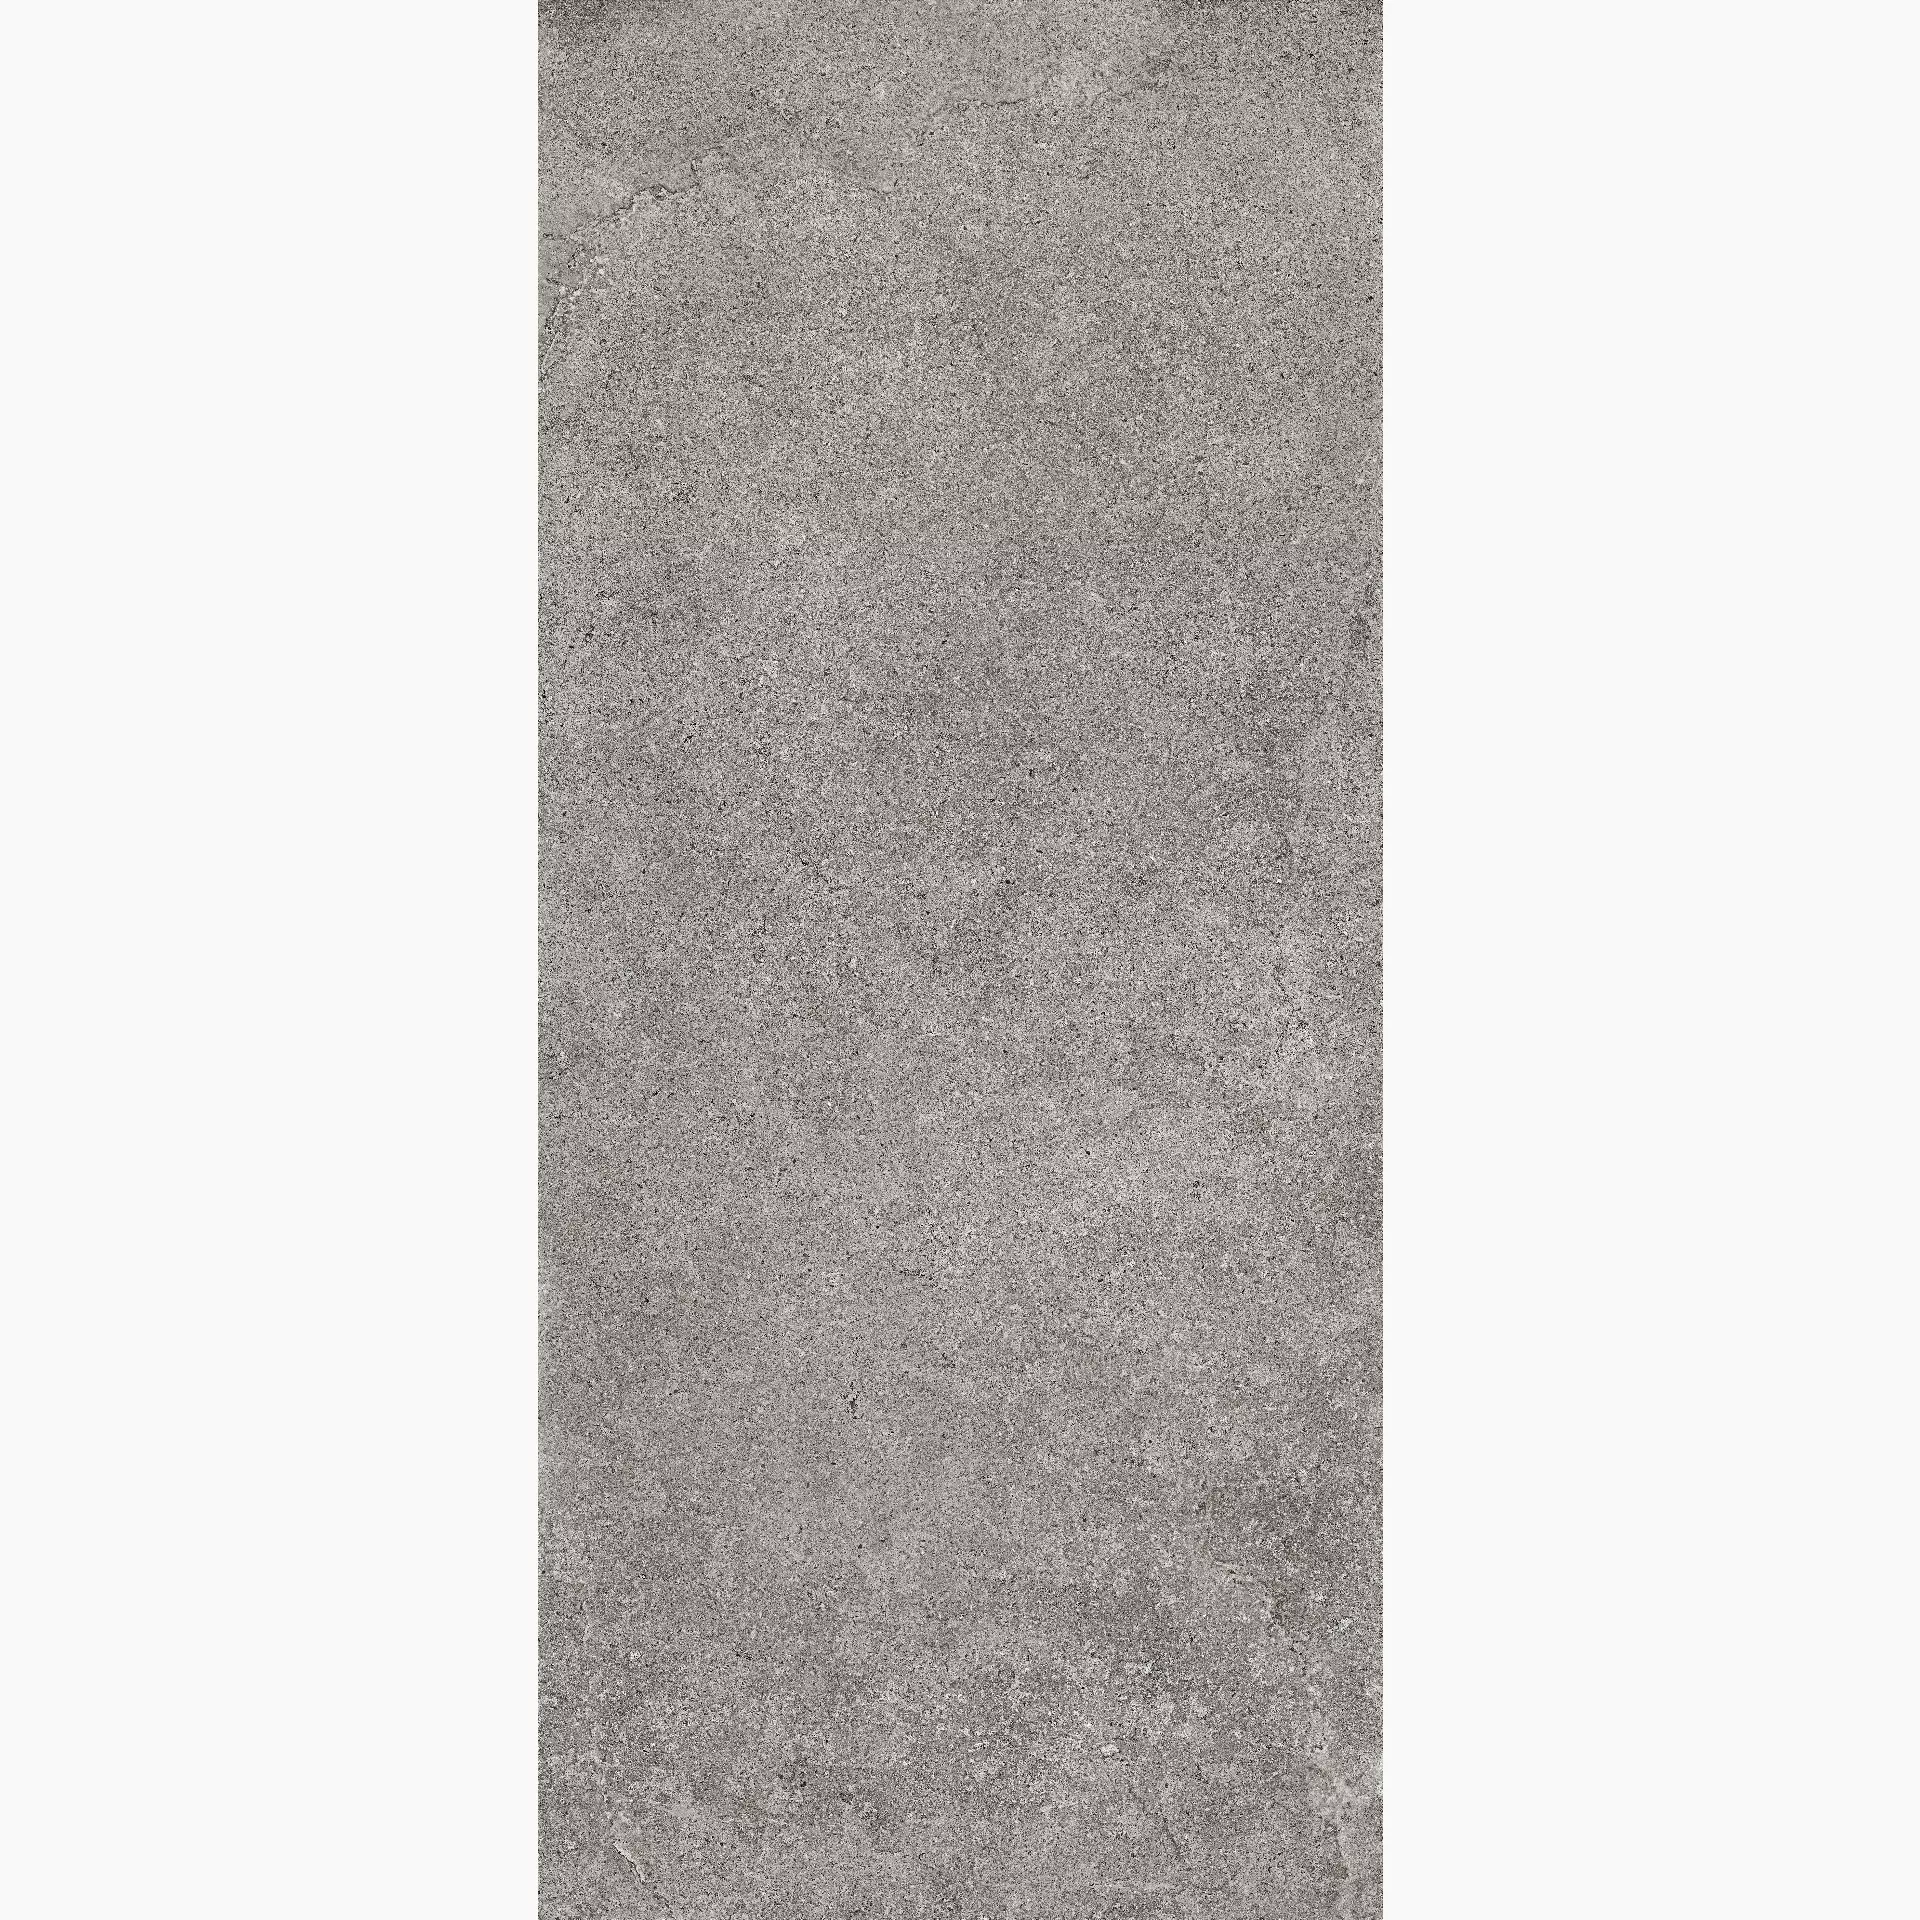 Cottodeste Kerlite Pura Grey Chiseled Grey EK6PU50 gemeisselt 120x278cm rektifiziert 6,5mm